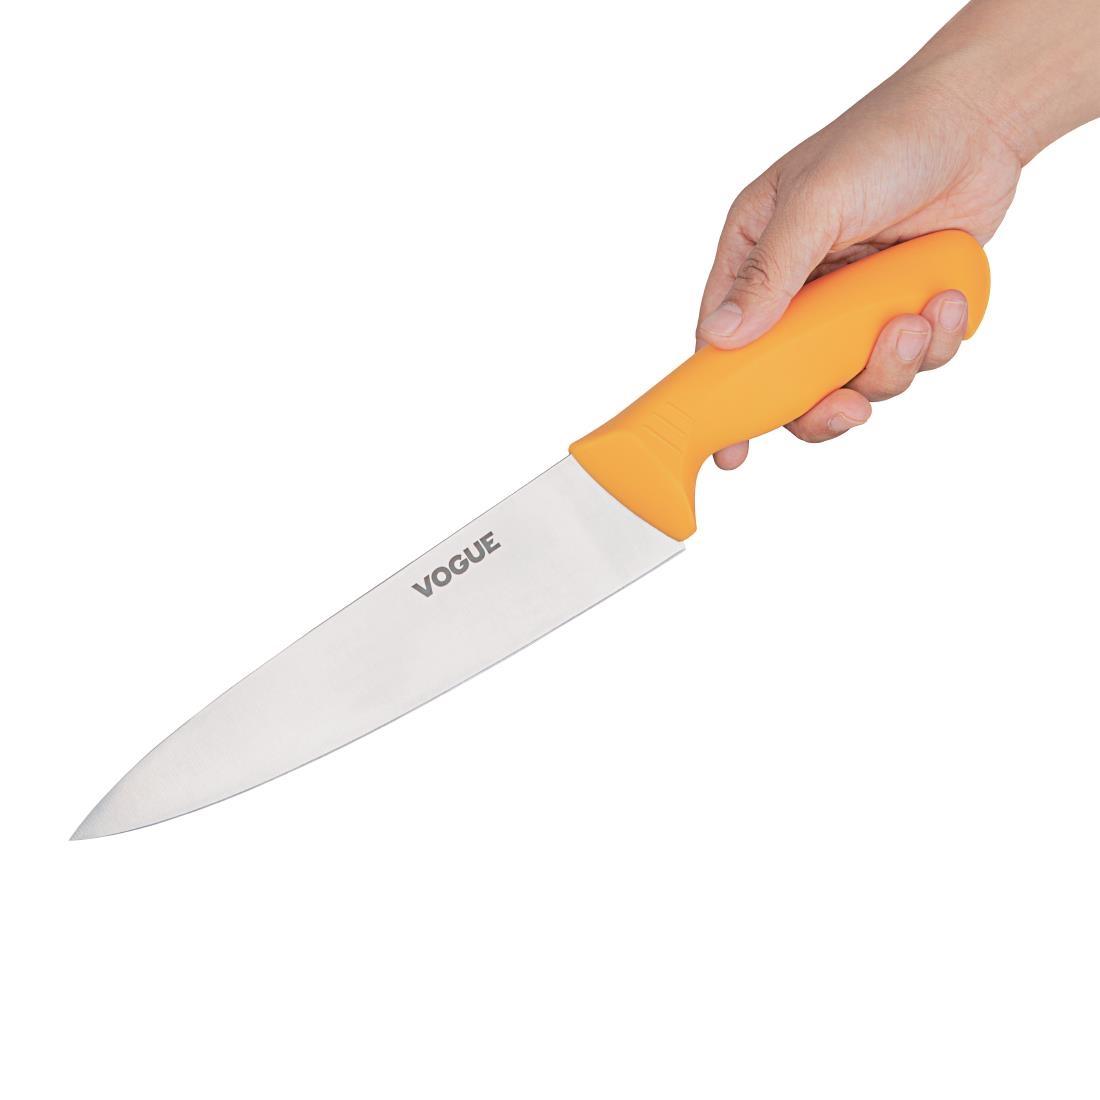 Vogue Soft Grip Pro Chef Knife 20cm - GH526  - 2